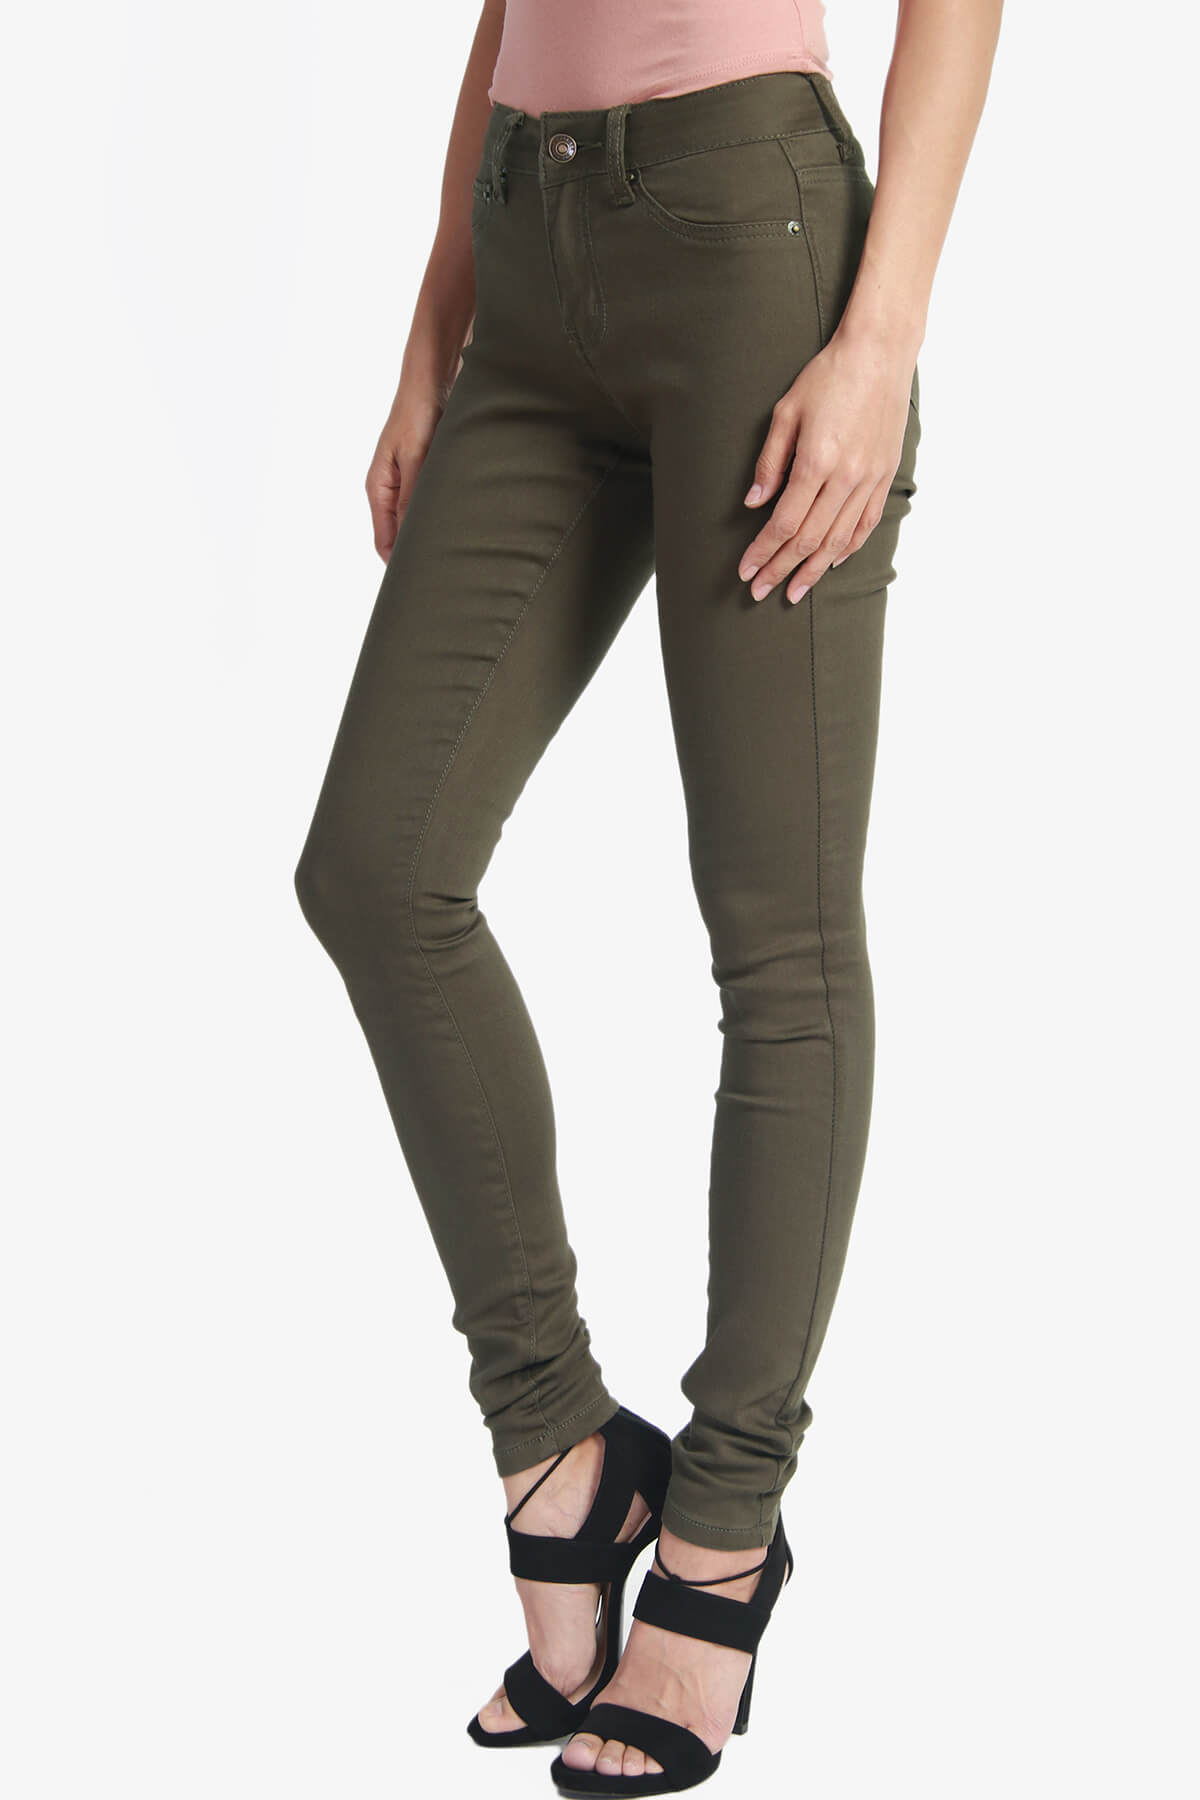 TheMogan Women's Army Olive Green 5 Pocket Stretch Denim Low Rise Skinny Jeans - image 3 of 7